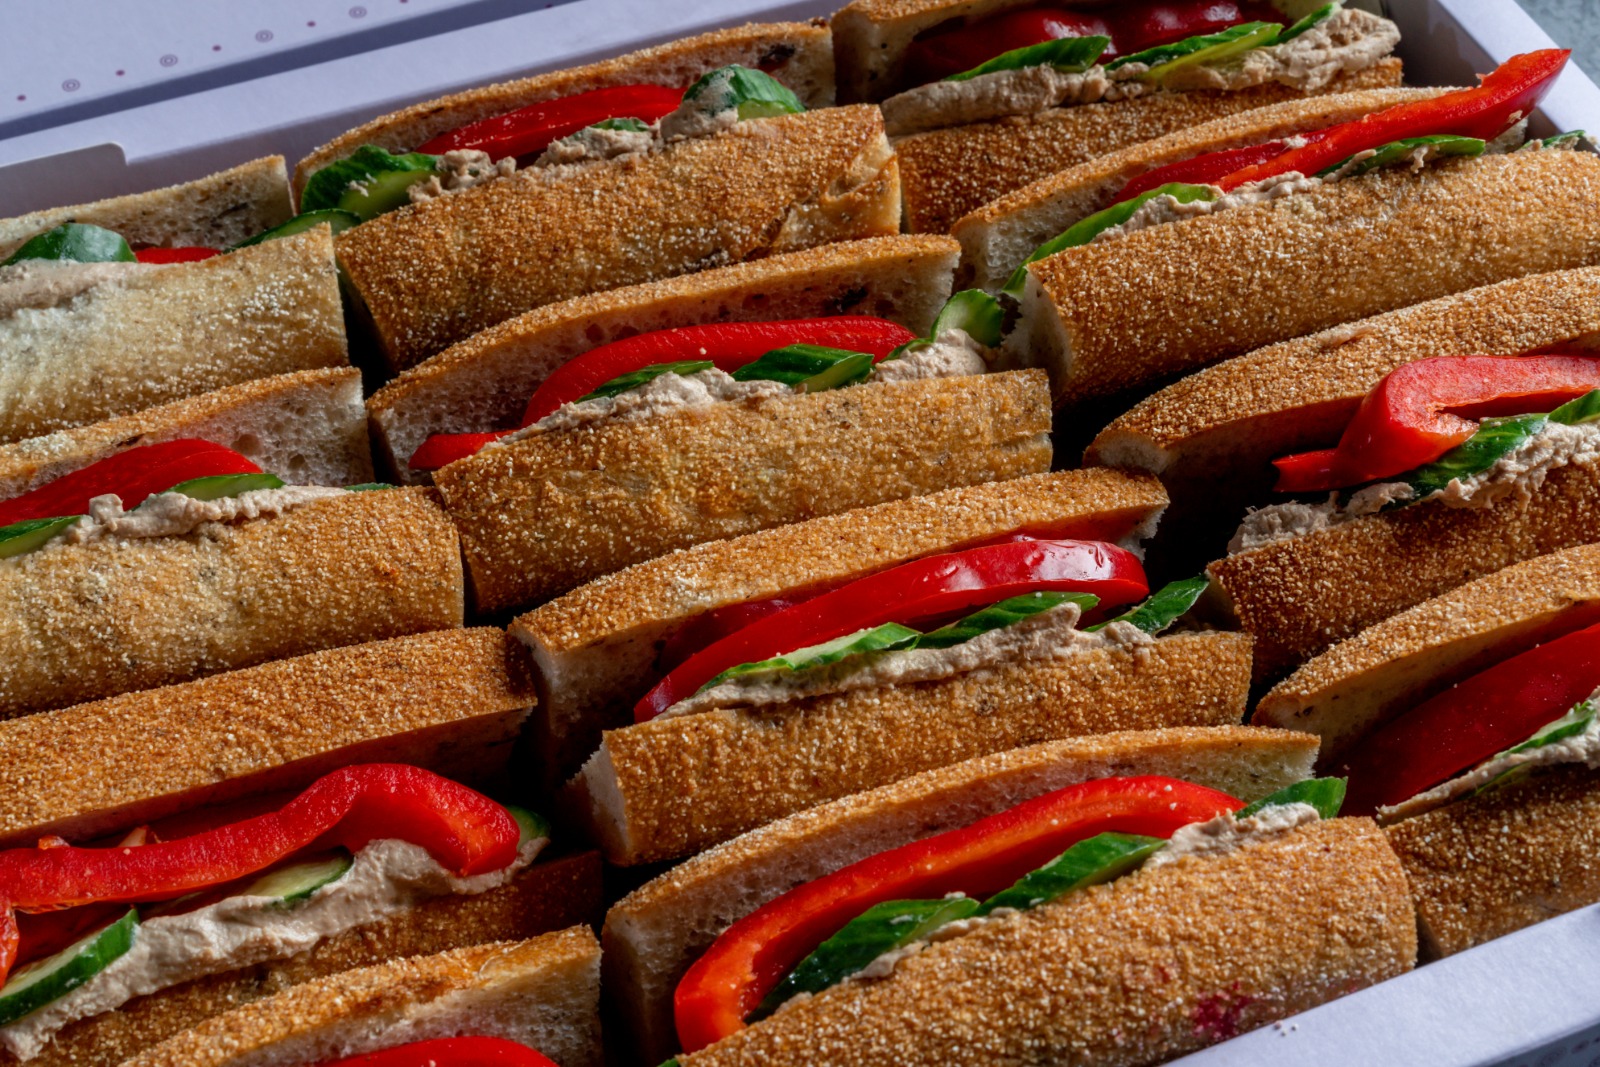 A tray of tuna sandwiches in Kalamata flute bread